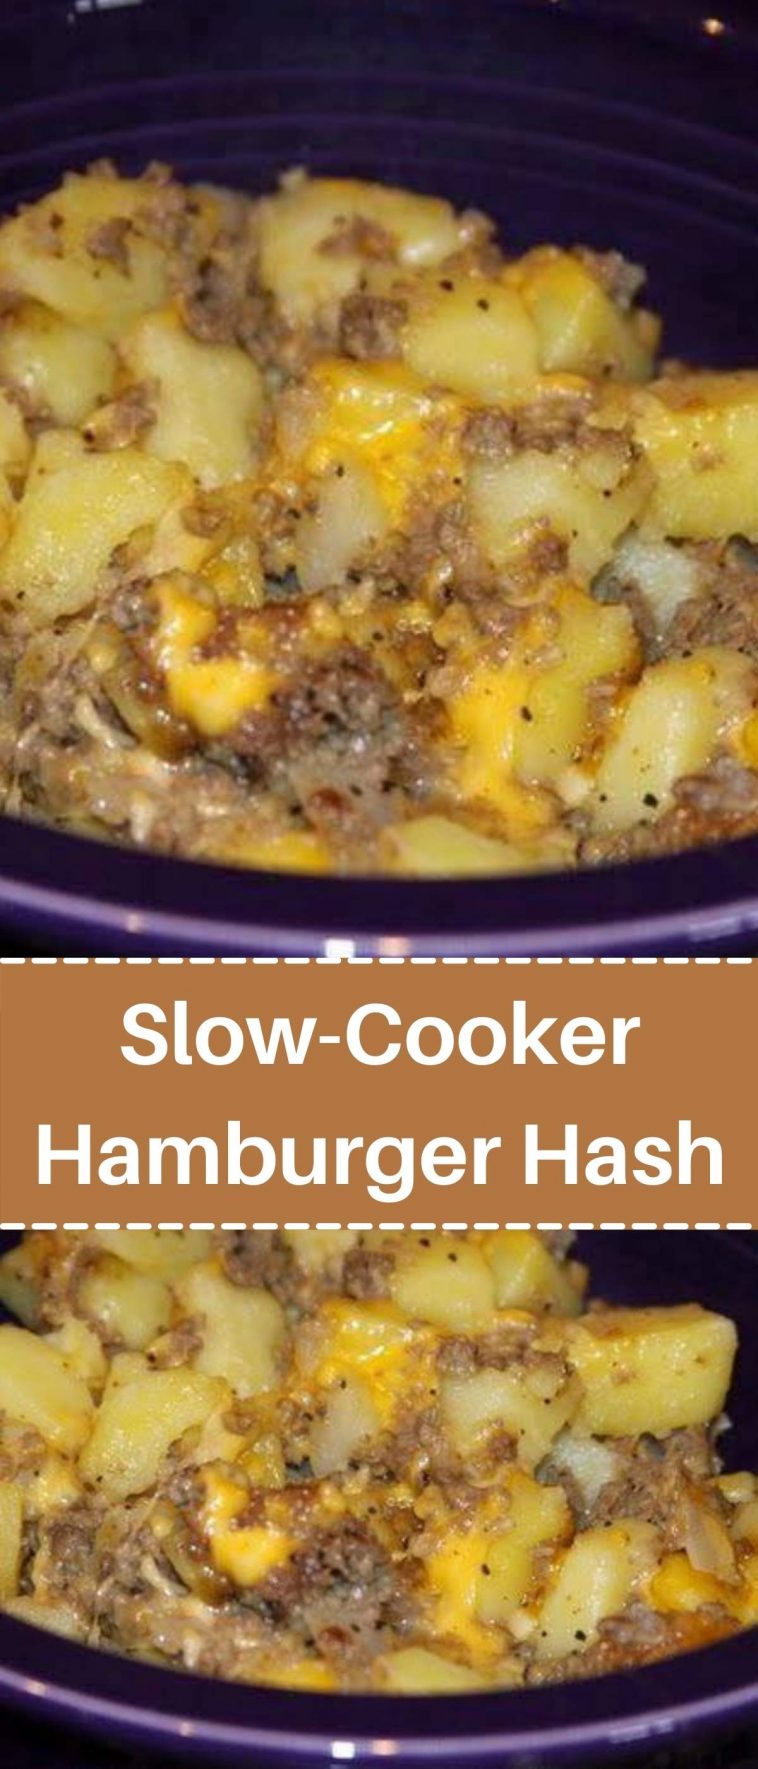 Slow-Cooker Hamburger Hash